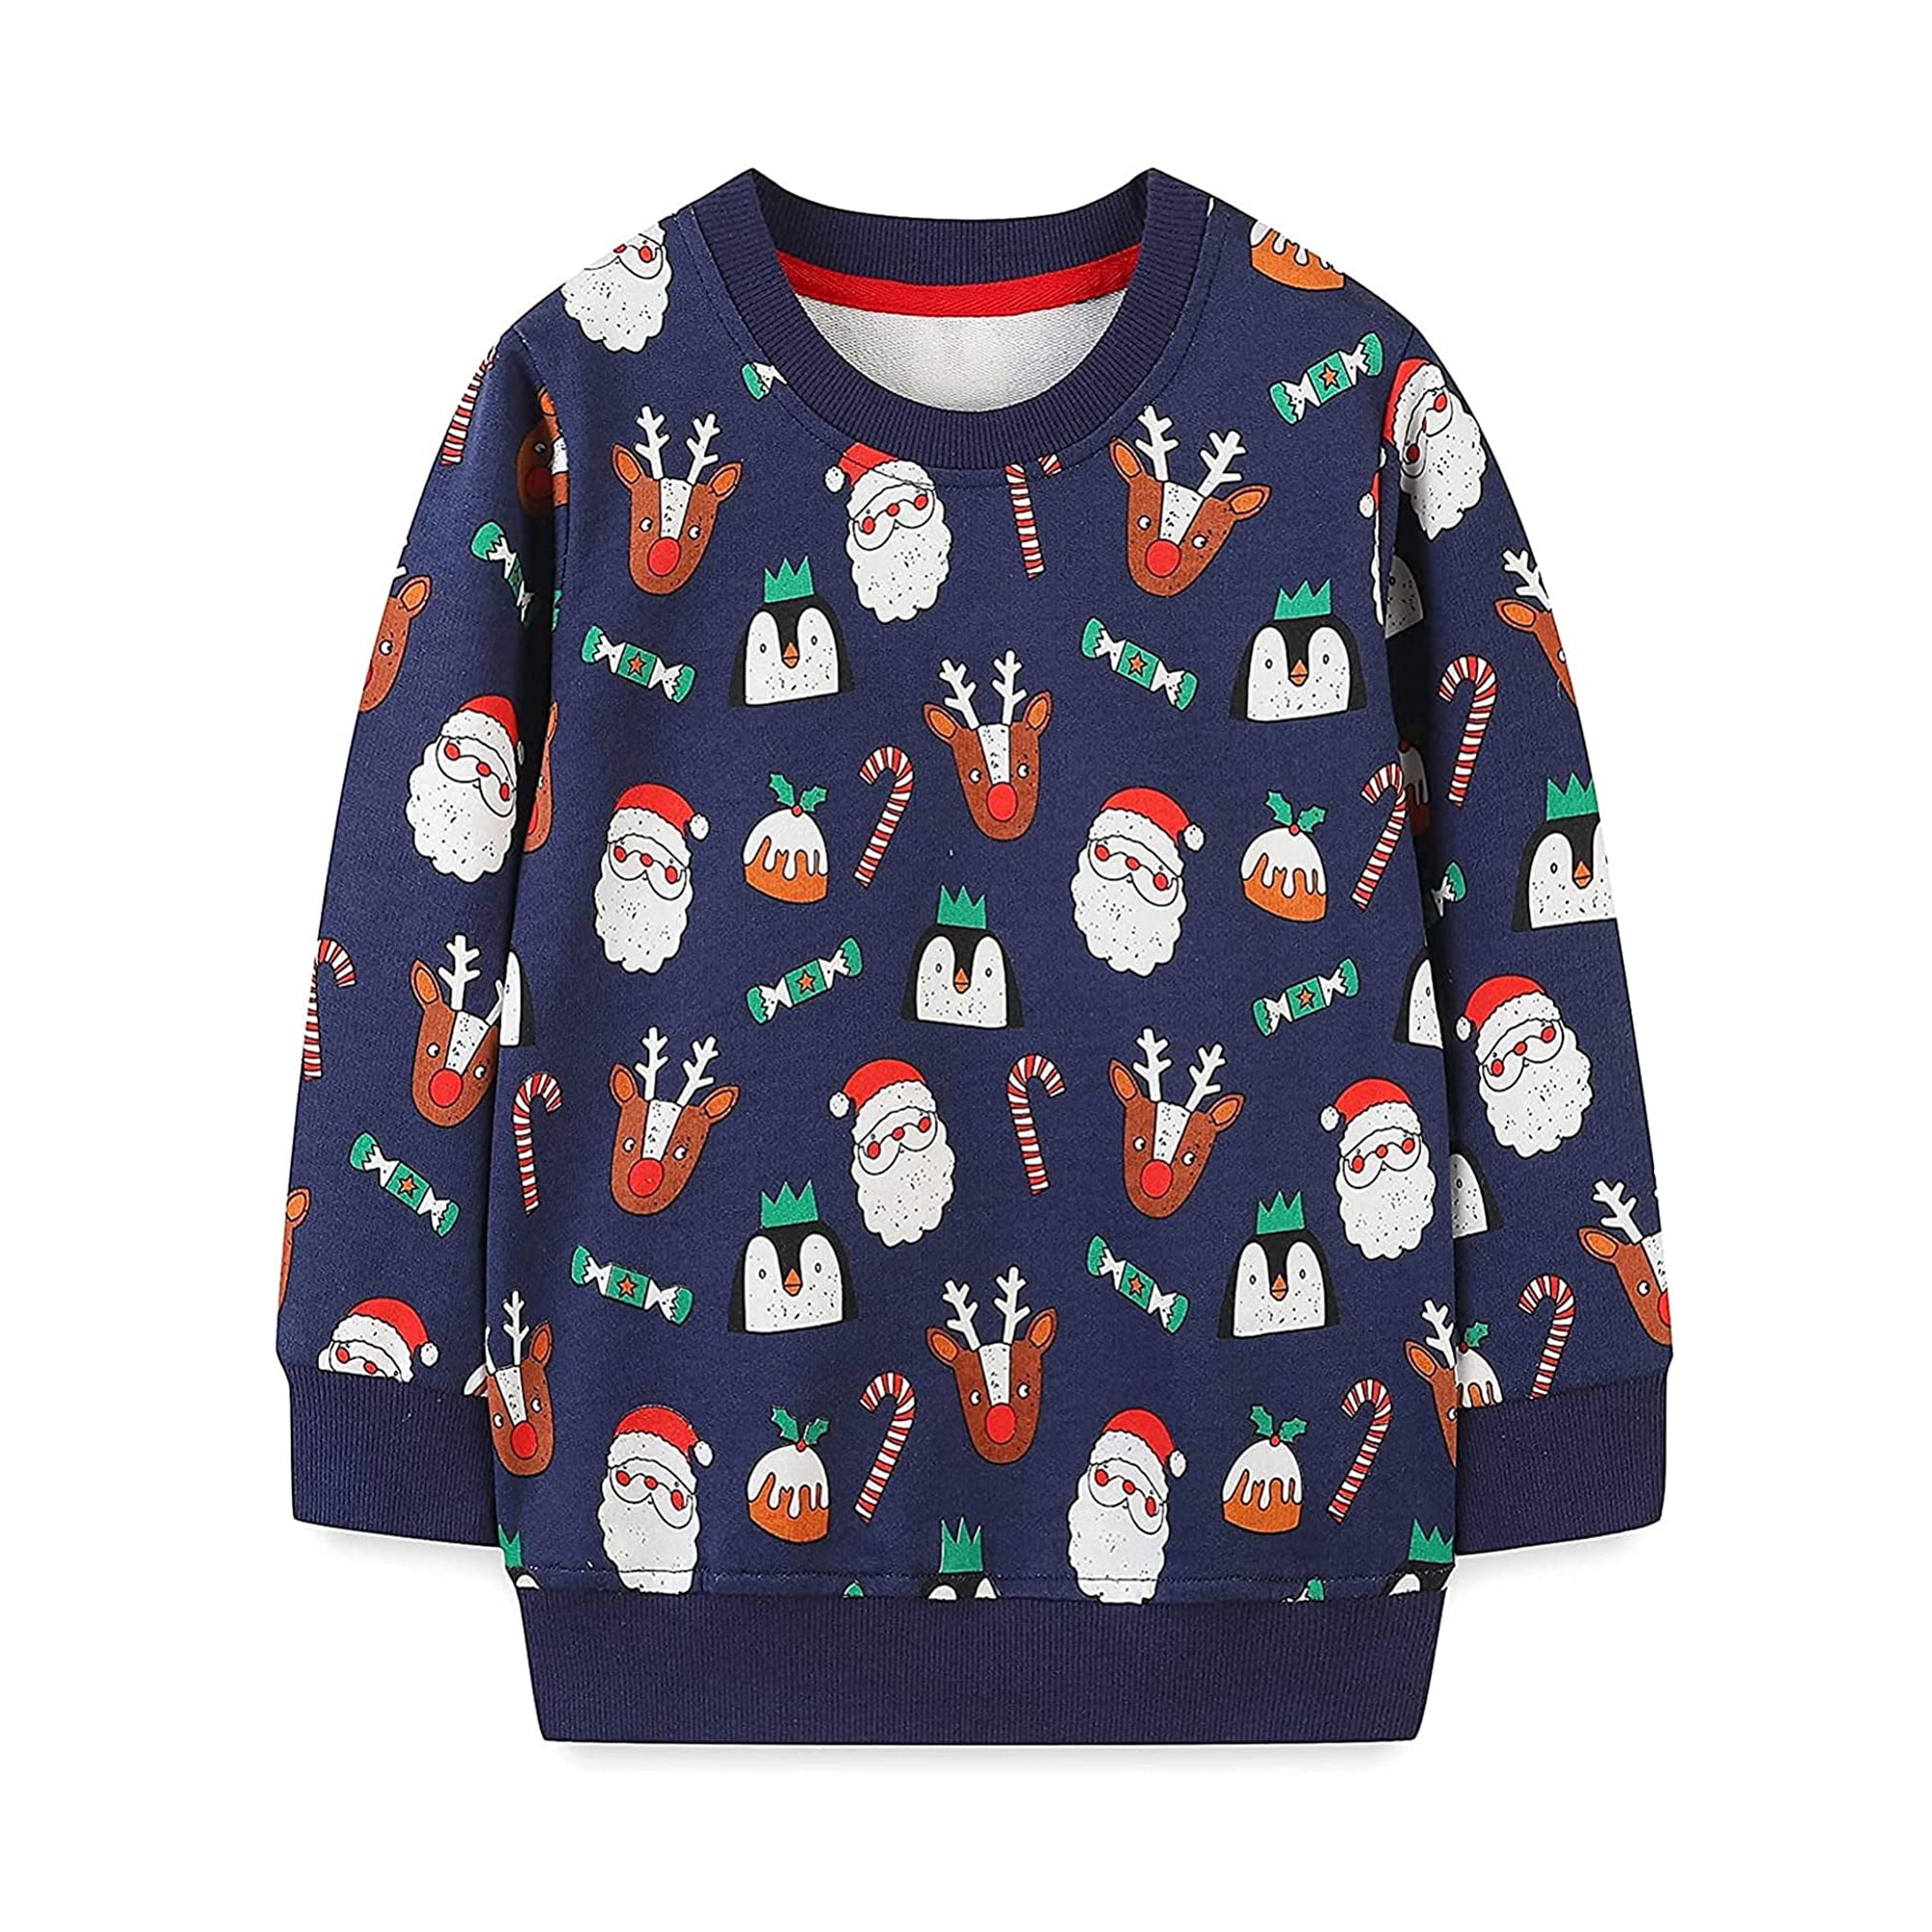 CM-Kid Toddler Boys Christmas Sweatshirts Cotton Sweater Long Sleeve ...